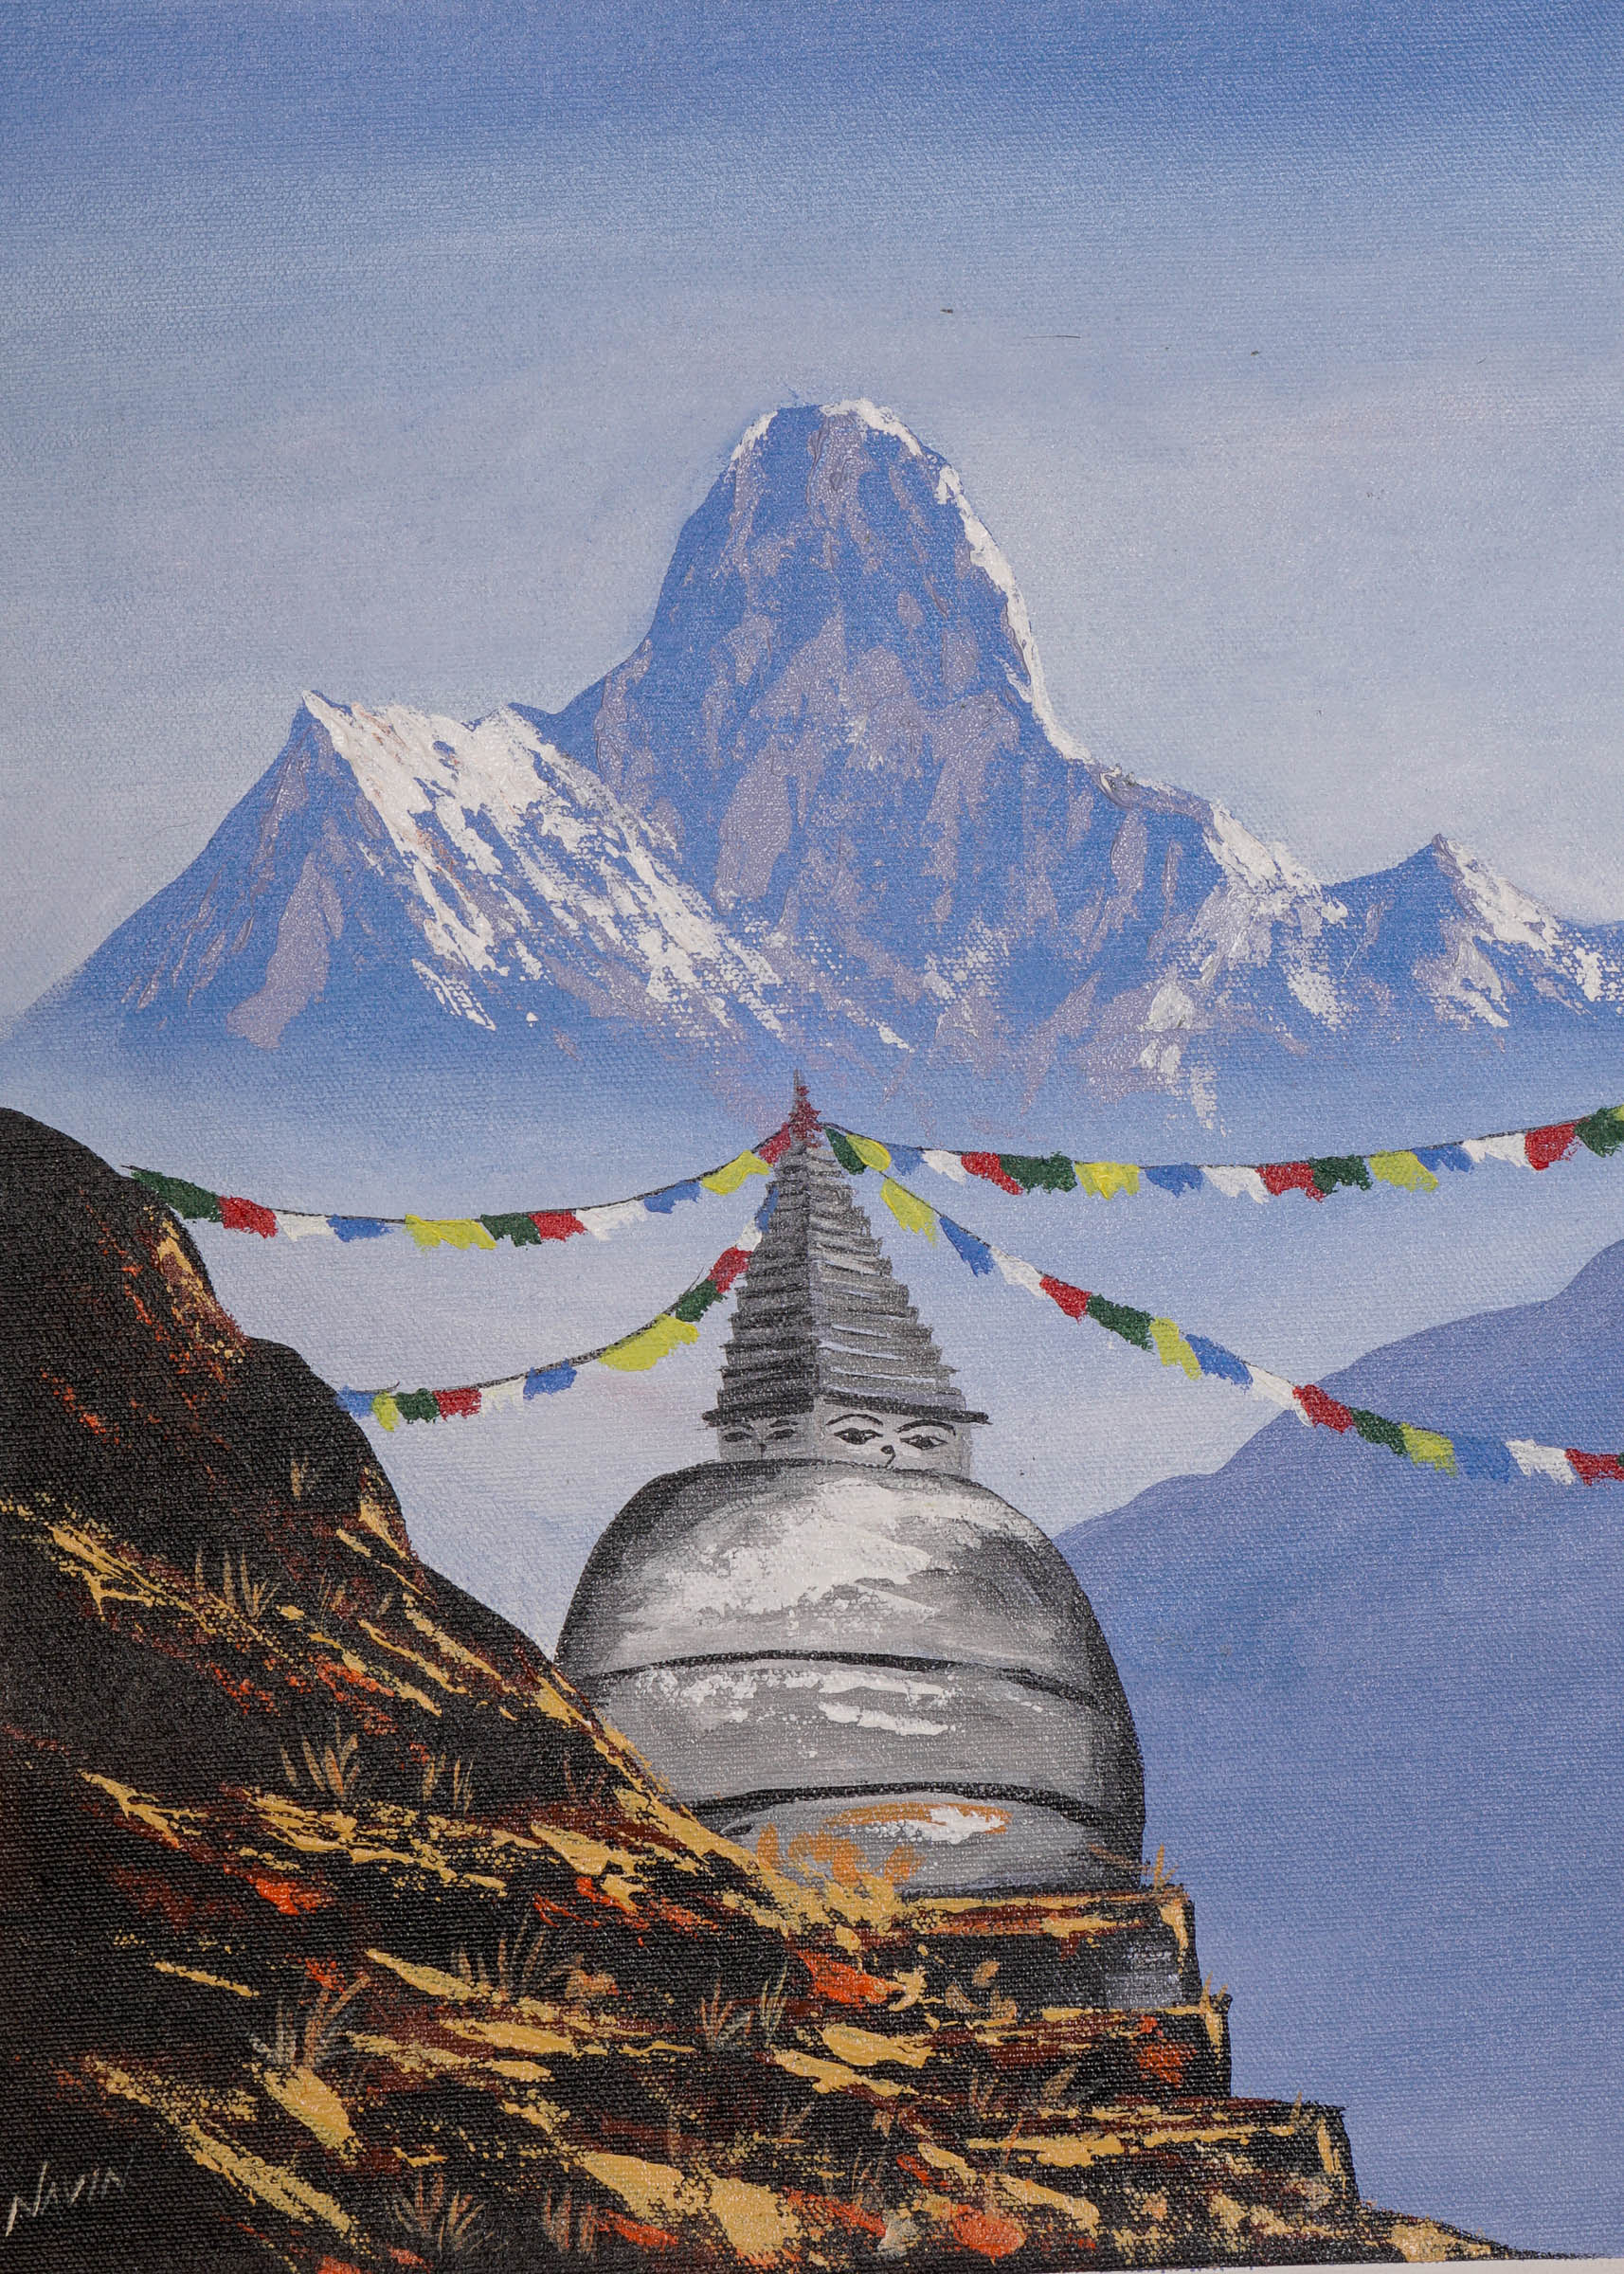 Tenzin Norgay Stupa Landscape painting with Himalayas range